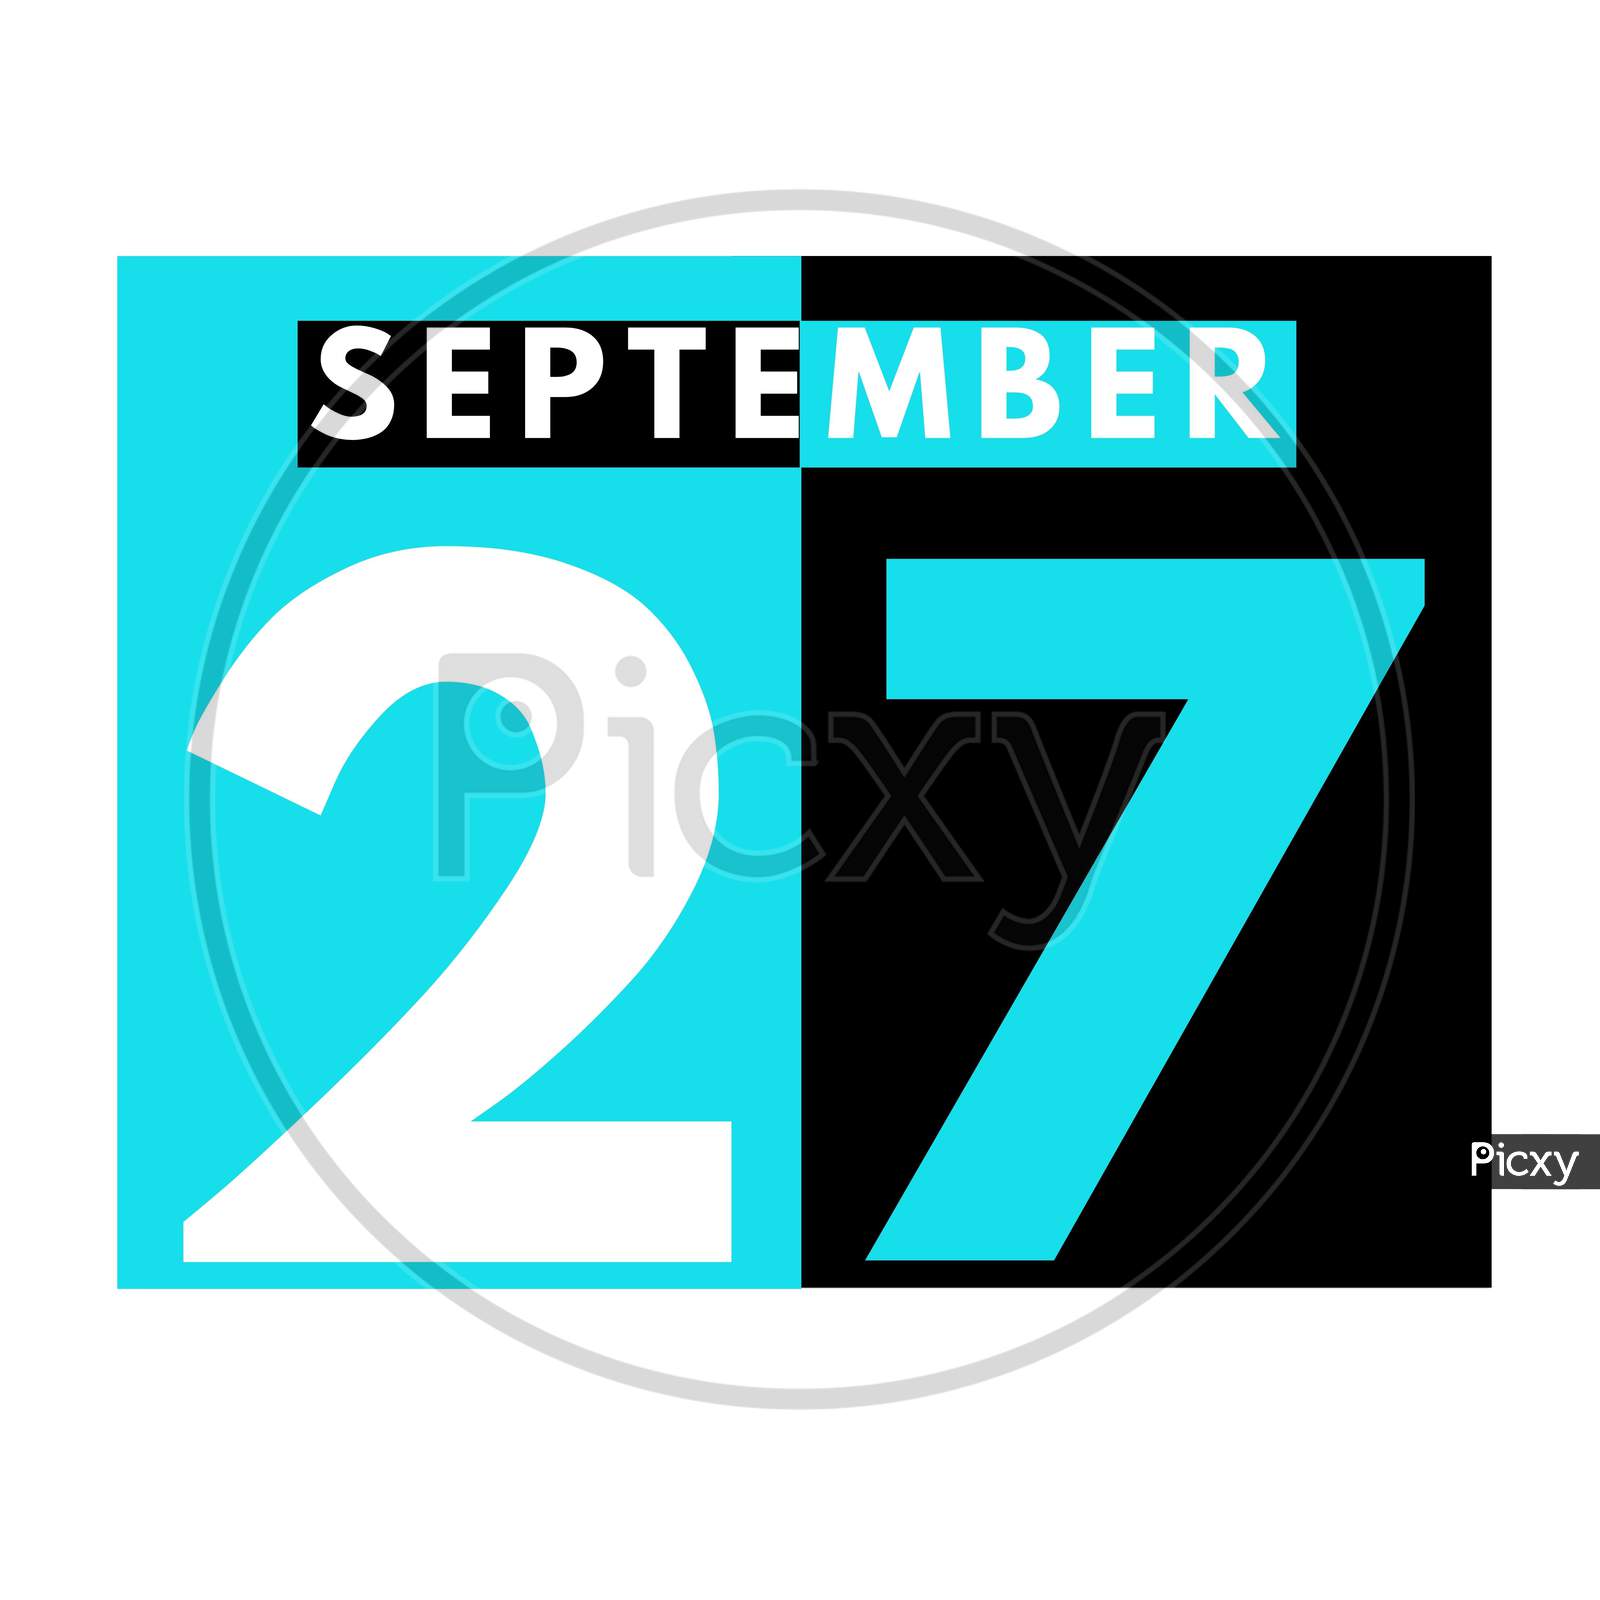 September 27 . Modern Daily Calendar Icon .Date ,Day, Month .Calendar For The Month Of September